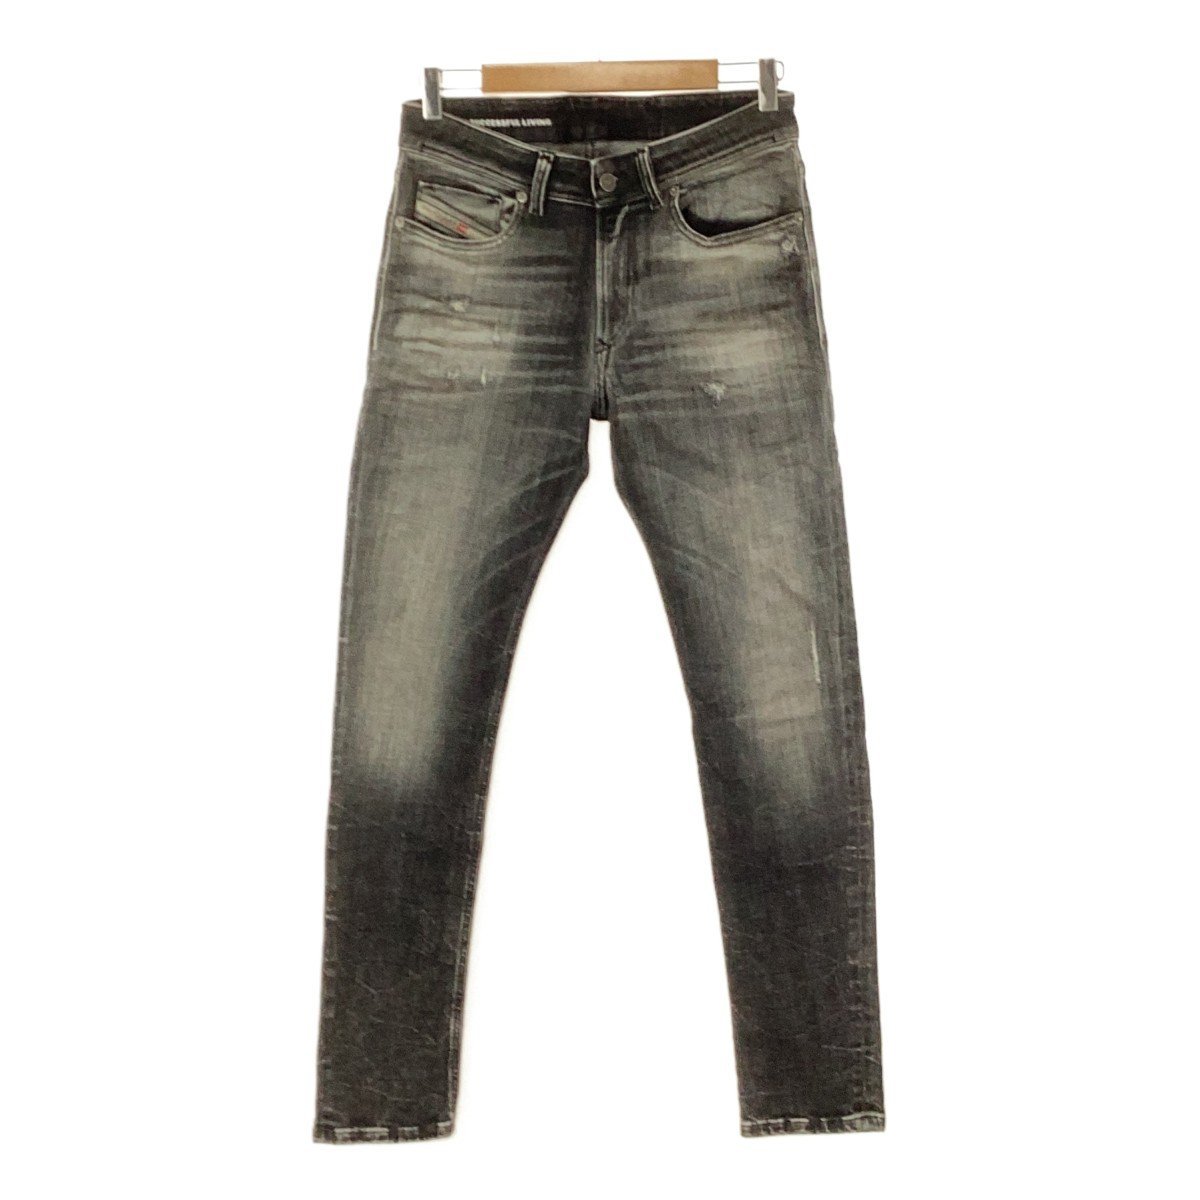 DIESEL ディーゼル 【men886D】 1979 sleenker jeans 03595 ストレッチデニム ジーンズ パンツ メンズ W30 美品 HC